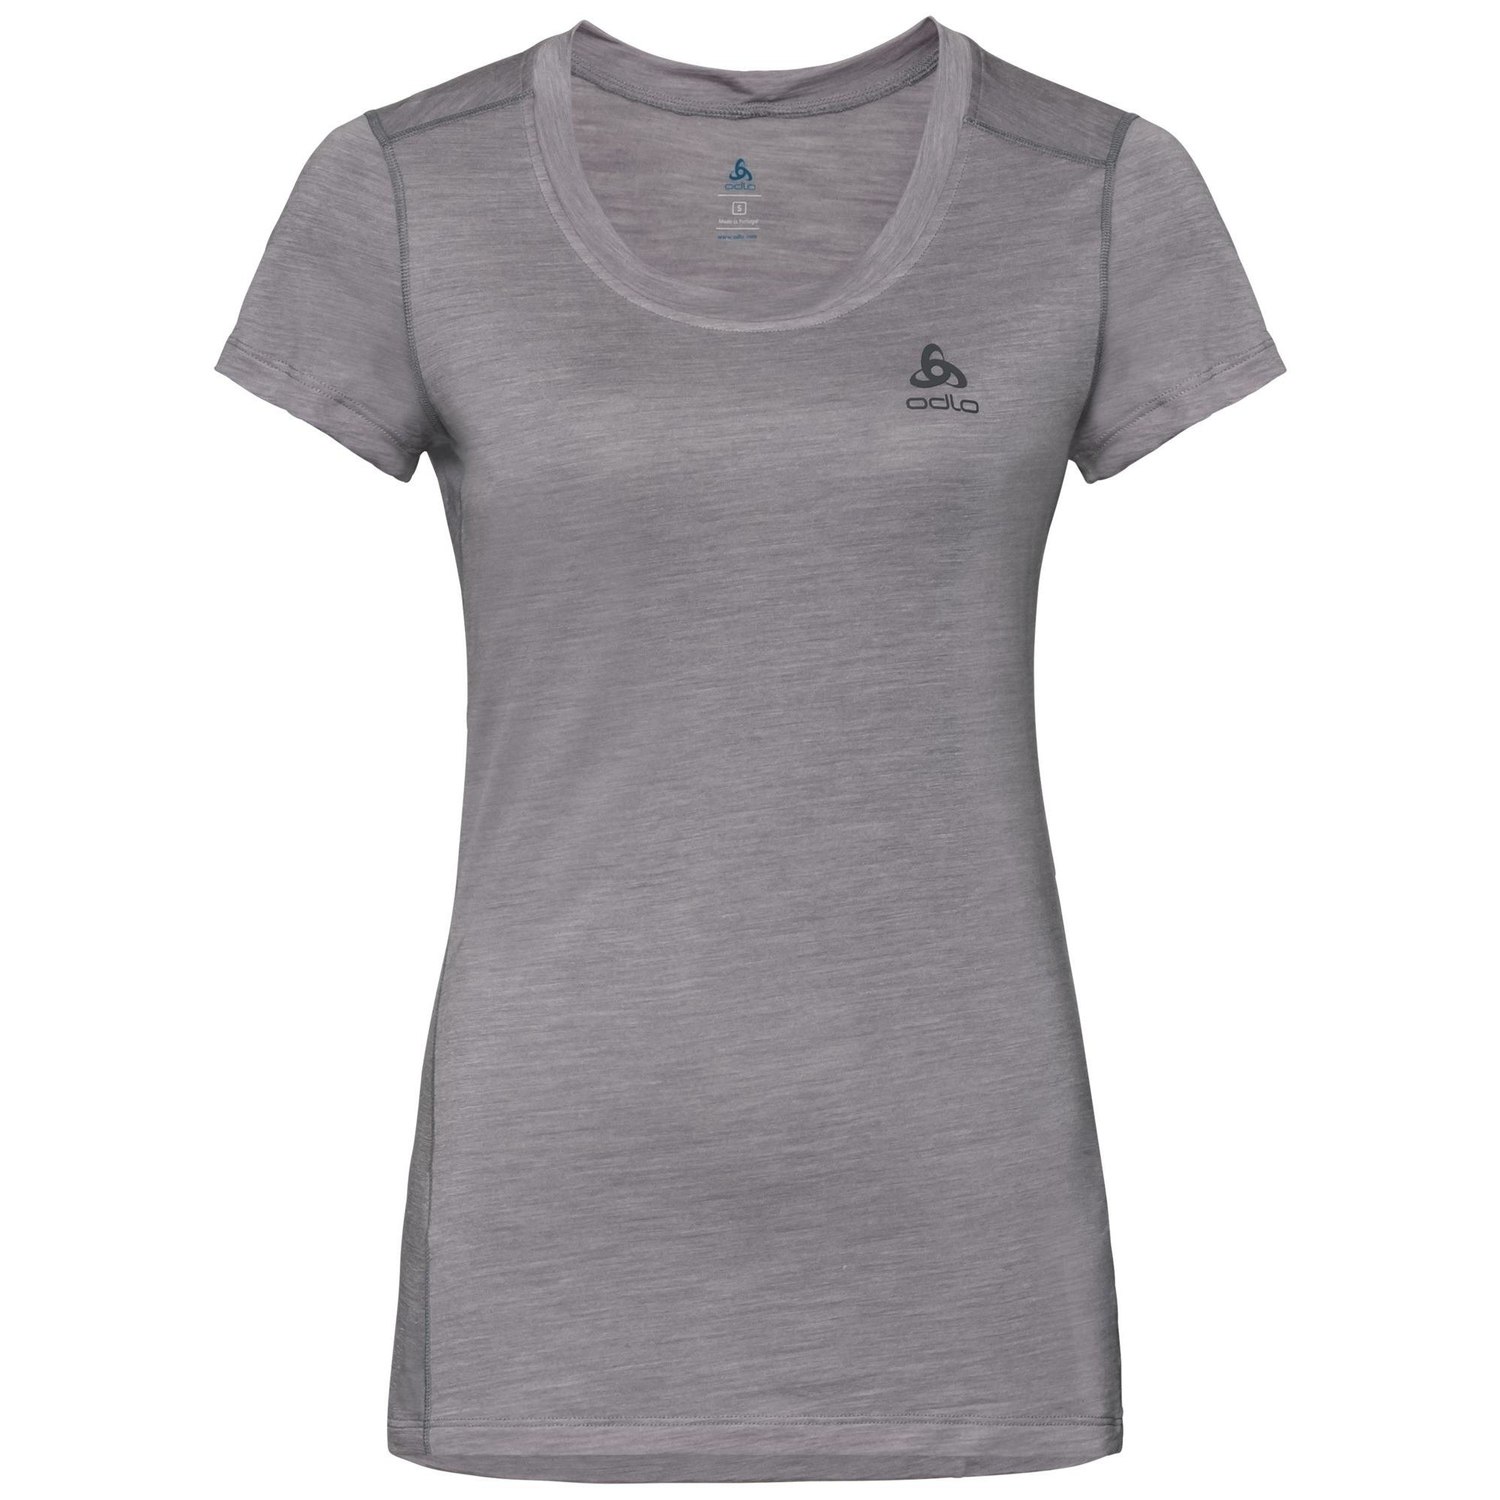 Produktbild von Odlo Performance Wool Light Base Layer T-Shirt Damen - grey melange